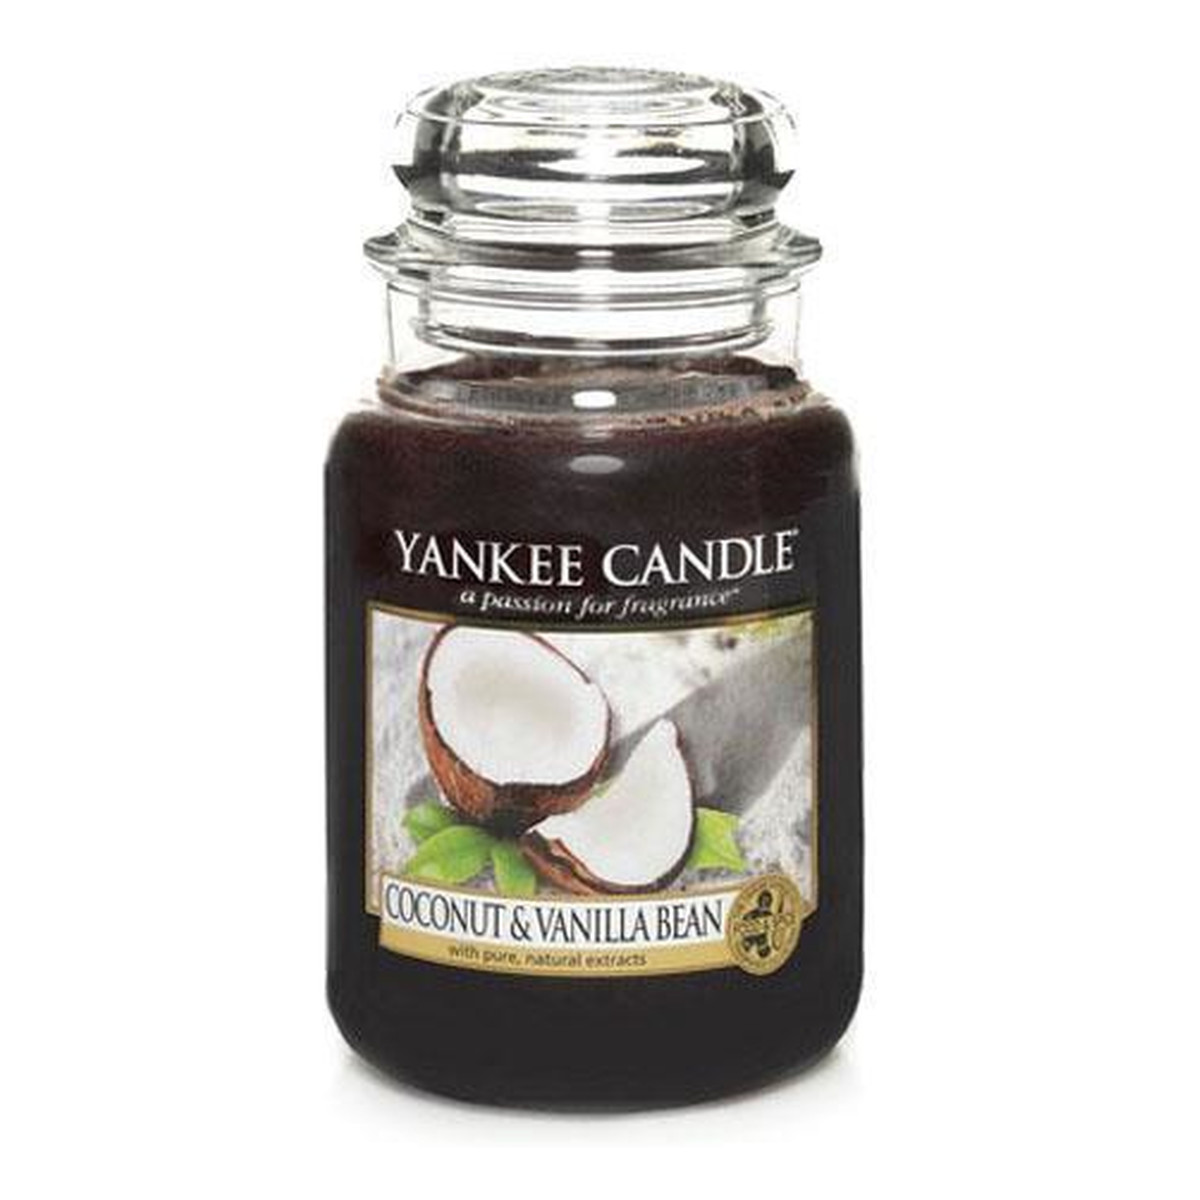 Yankee Candle Large Jar duża świeczka zapachowa Coconut & Vanilla Bean 623g